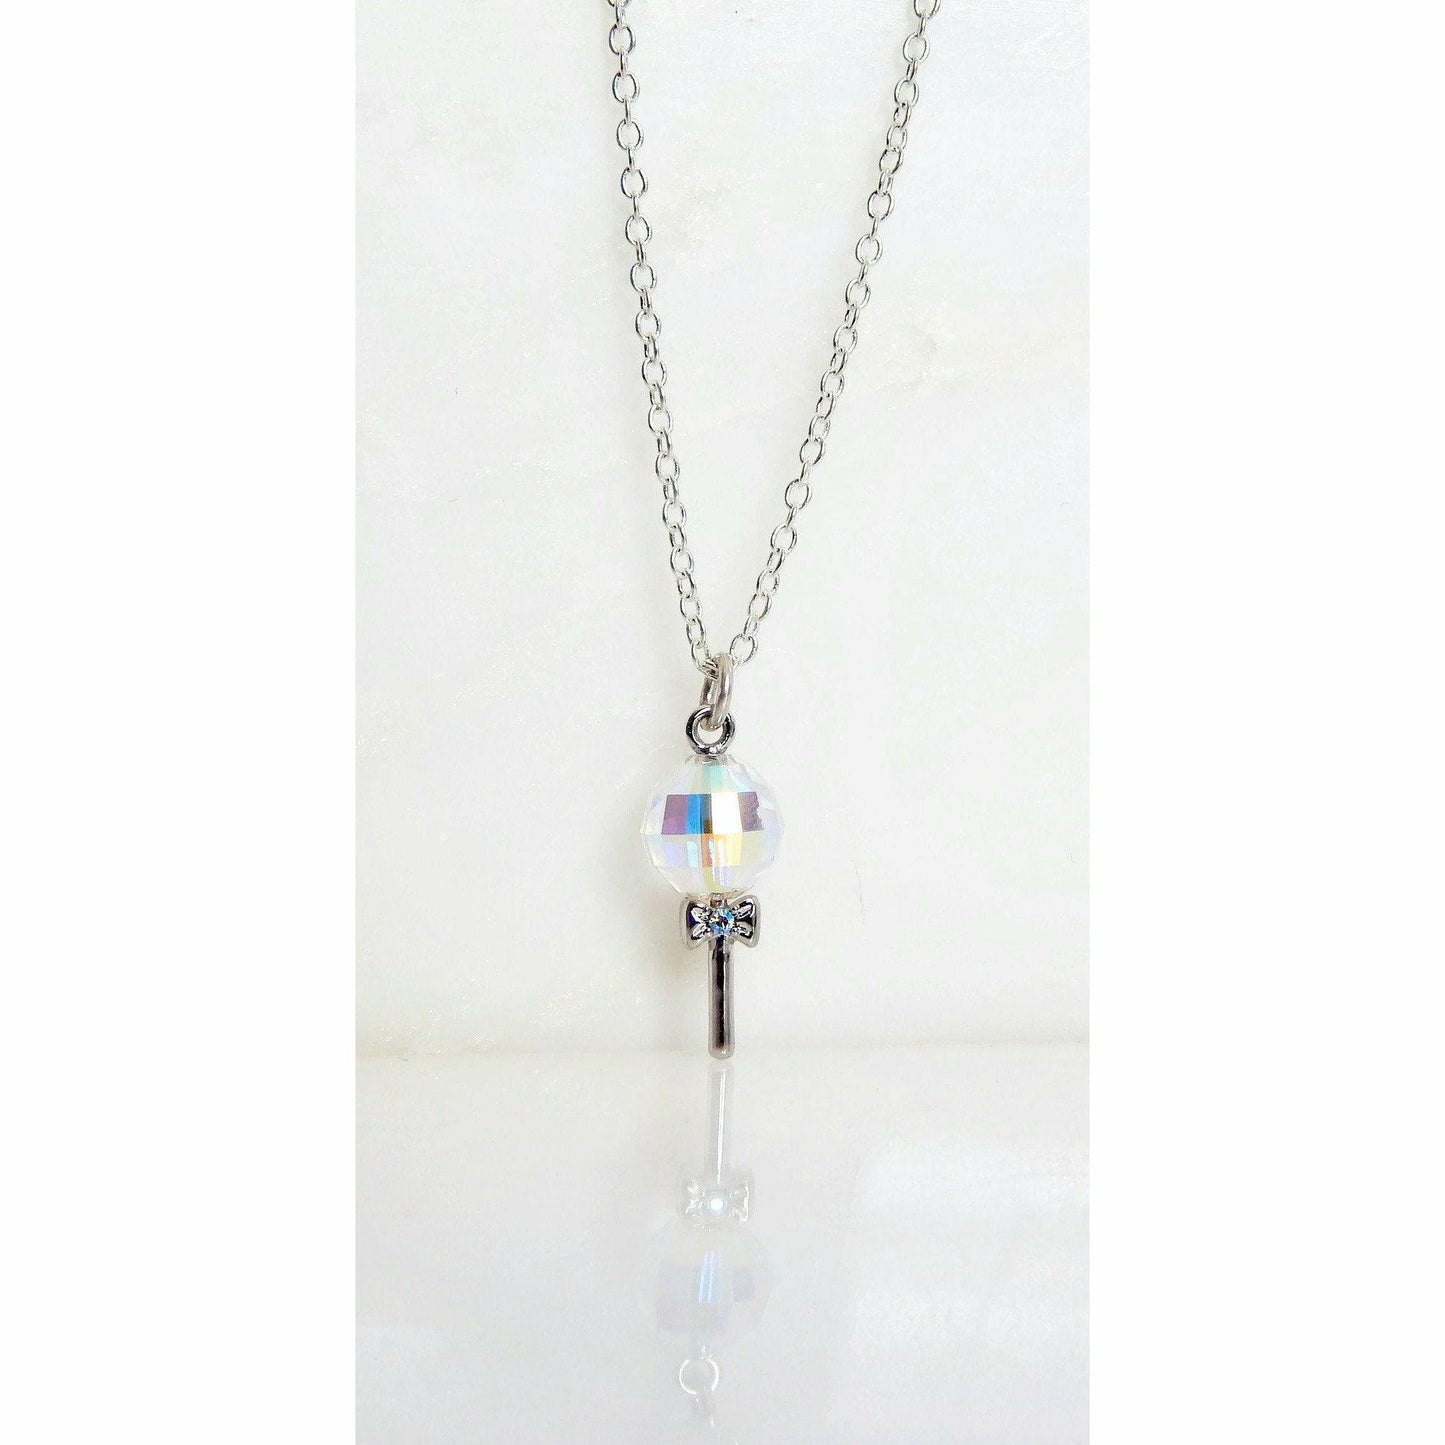 Crystal lollipop necklace